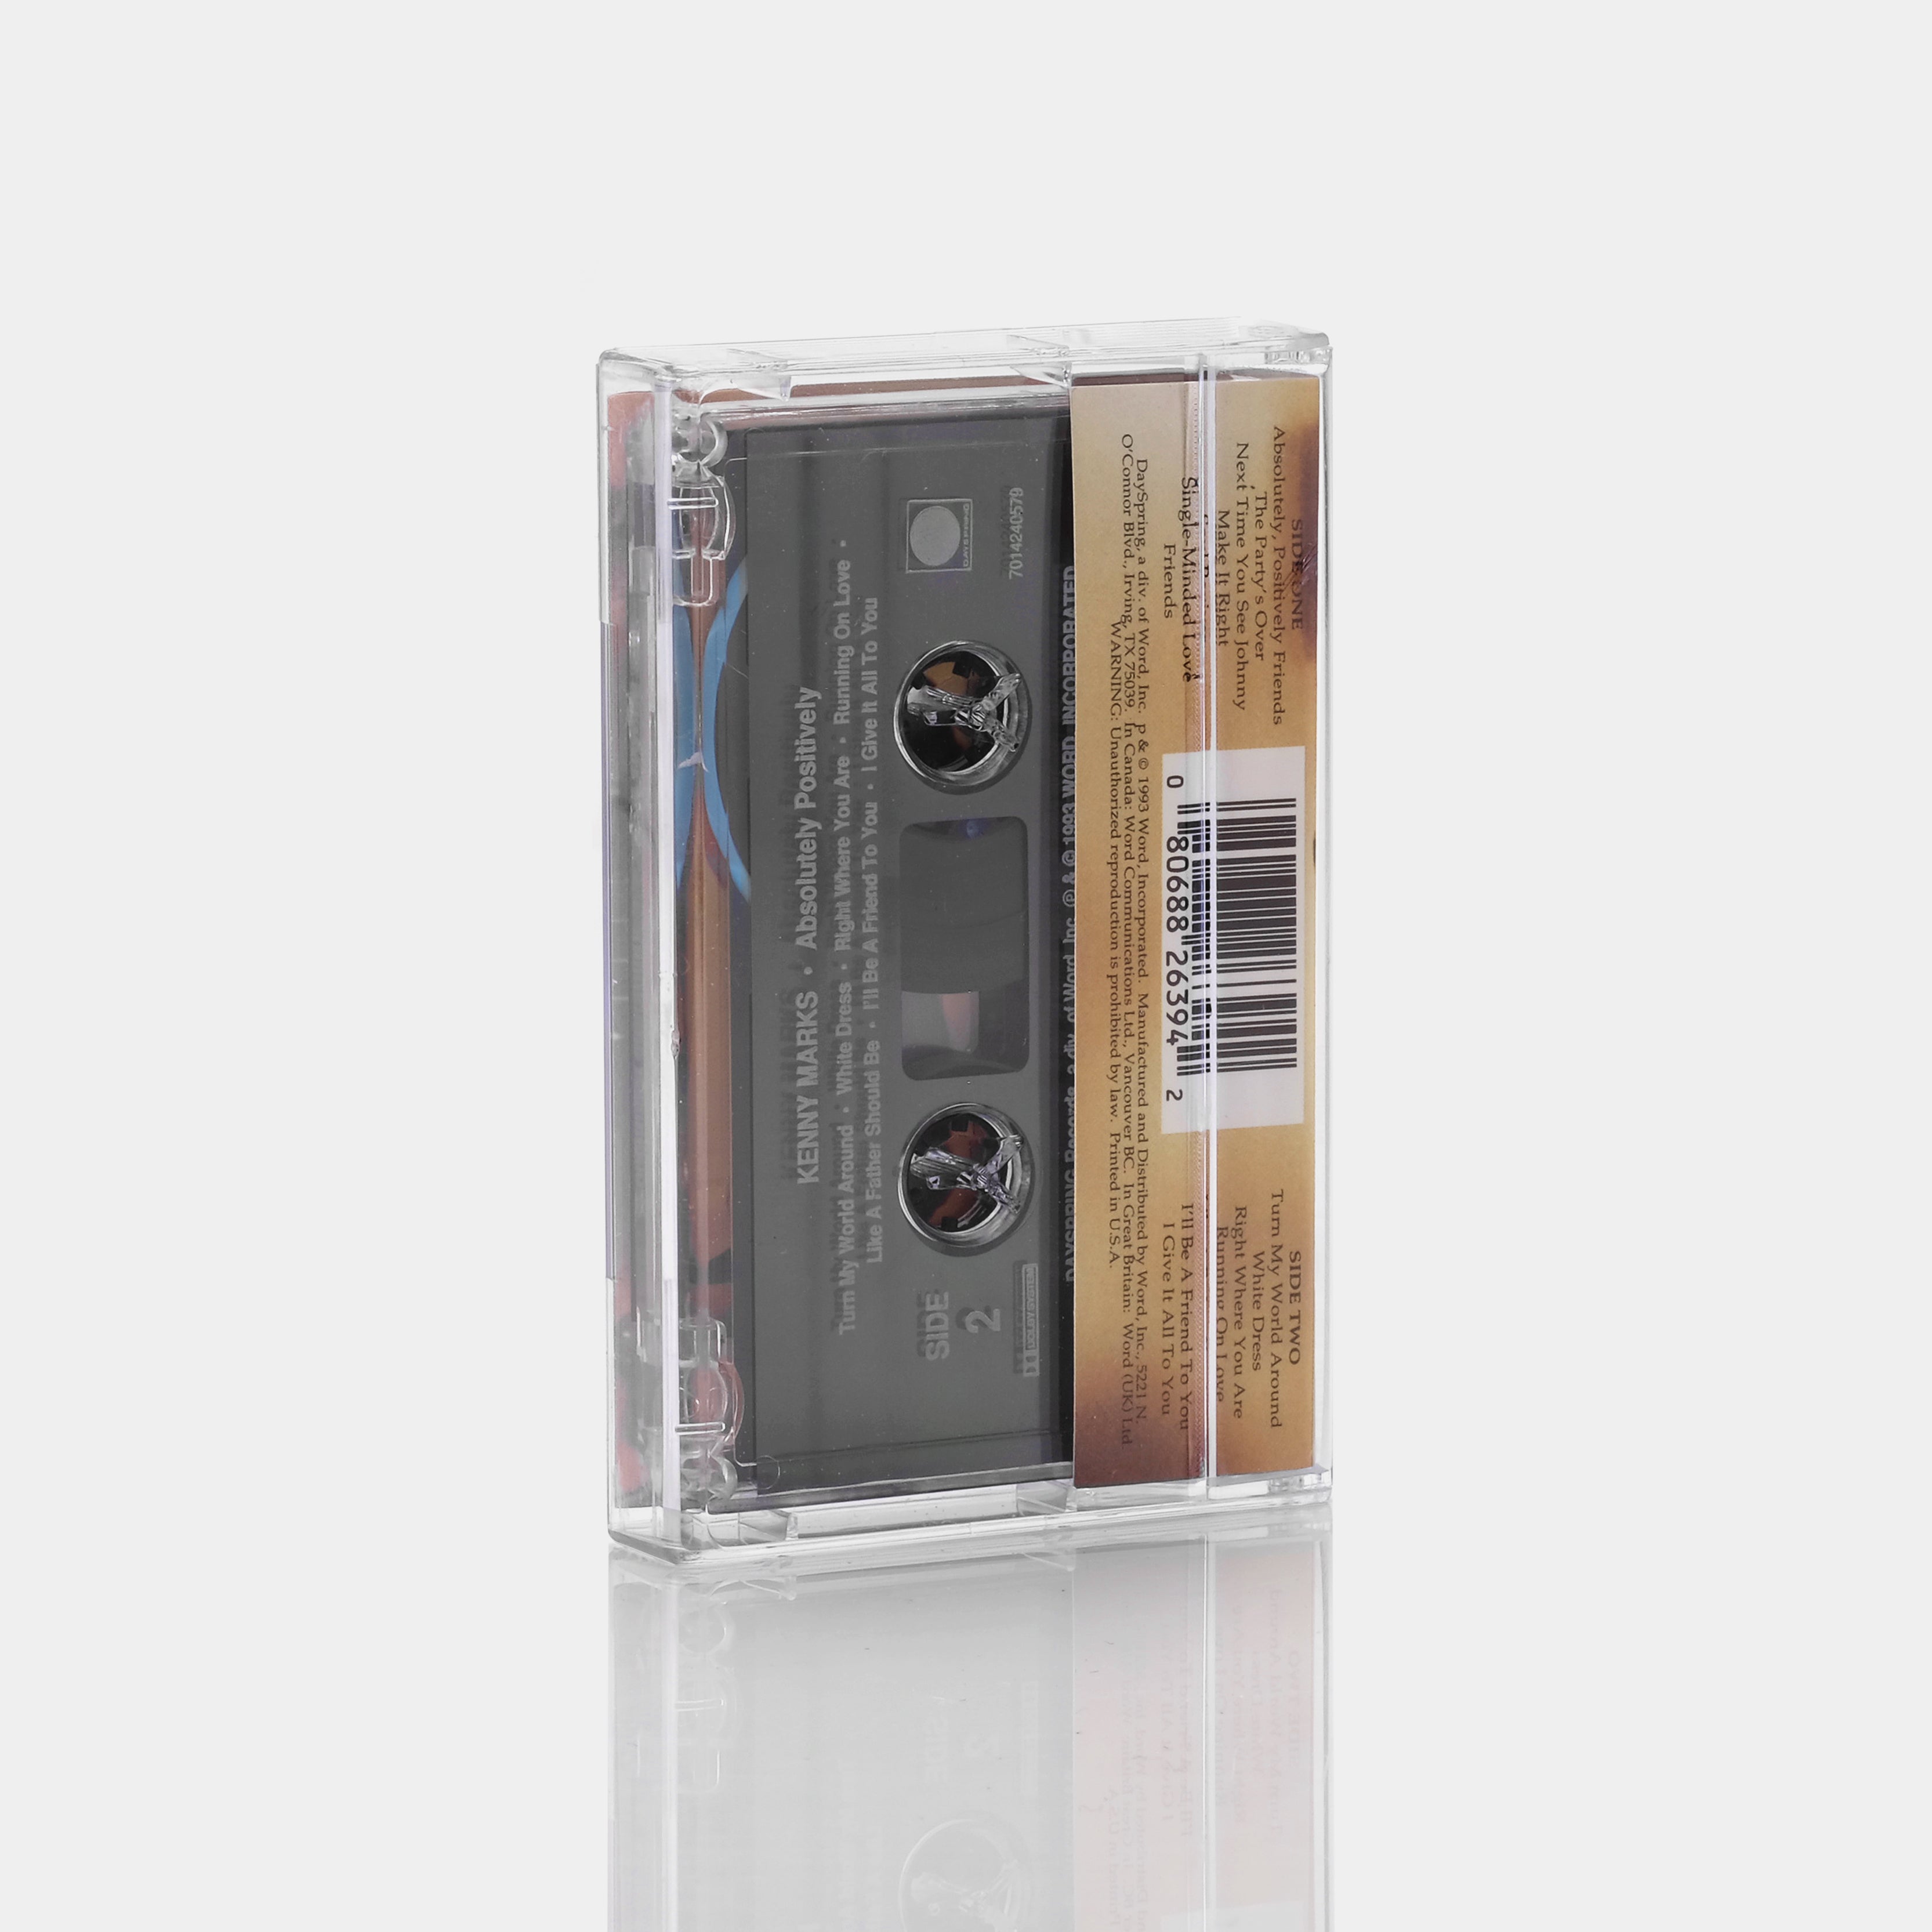 Kenny Marks - Absolutely Positively Cassette Tape